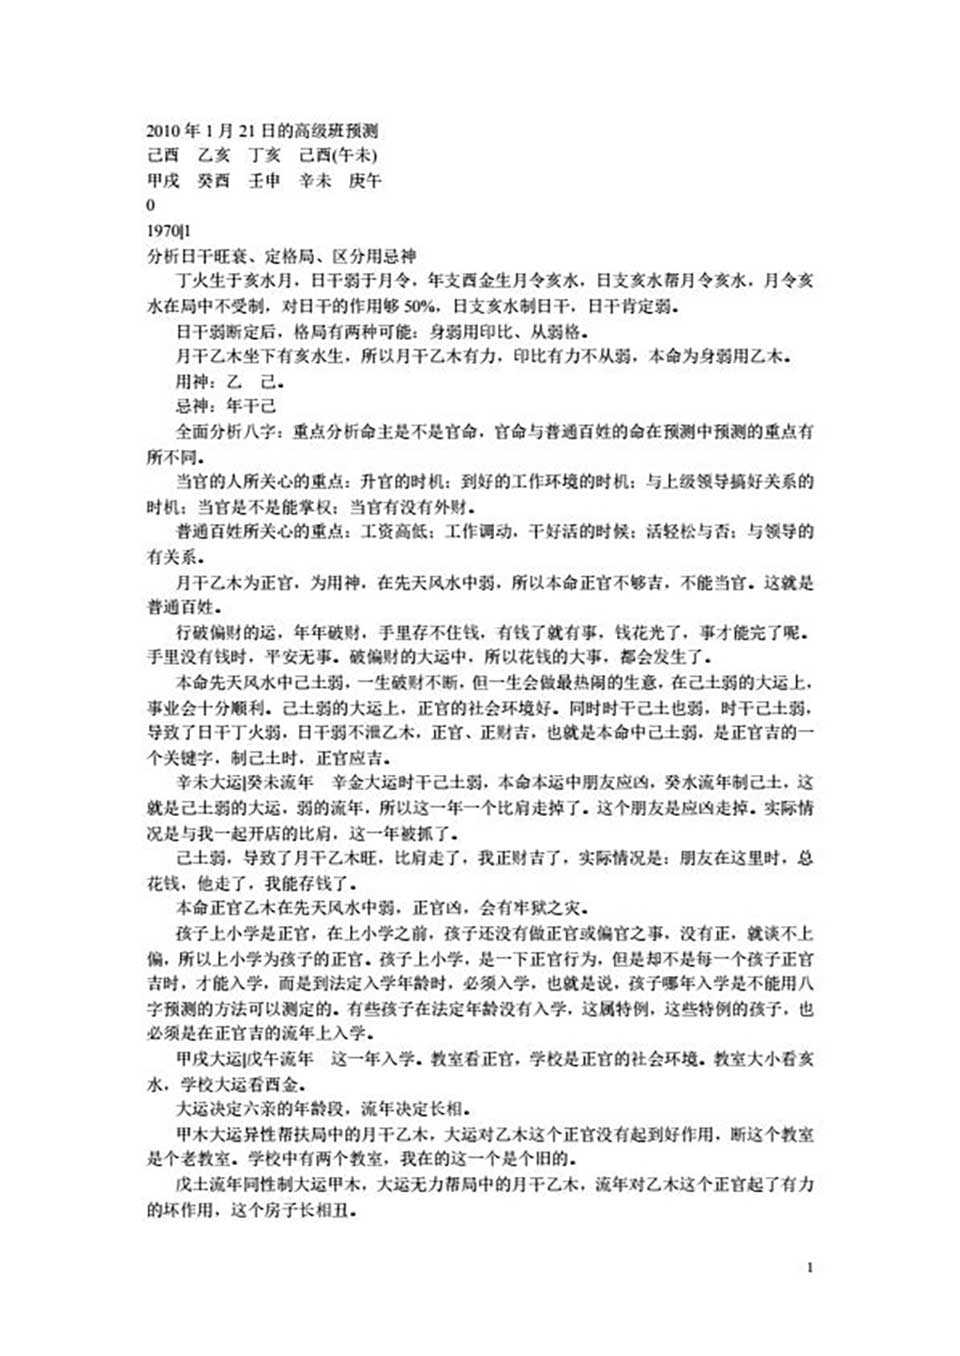 Li Hanchen – Advanced Class Prediction for January 21, 2010 30 pages.pdf